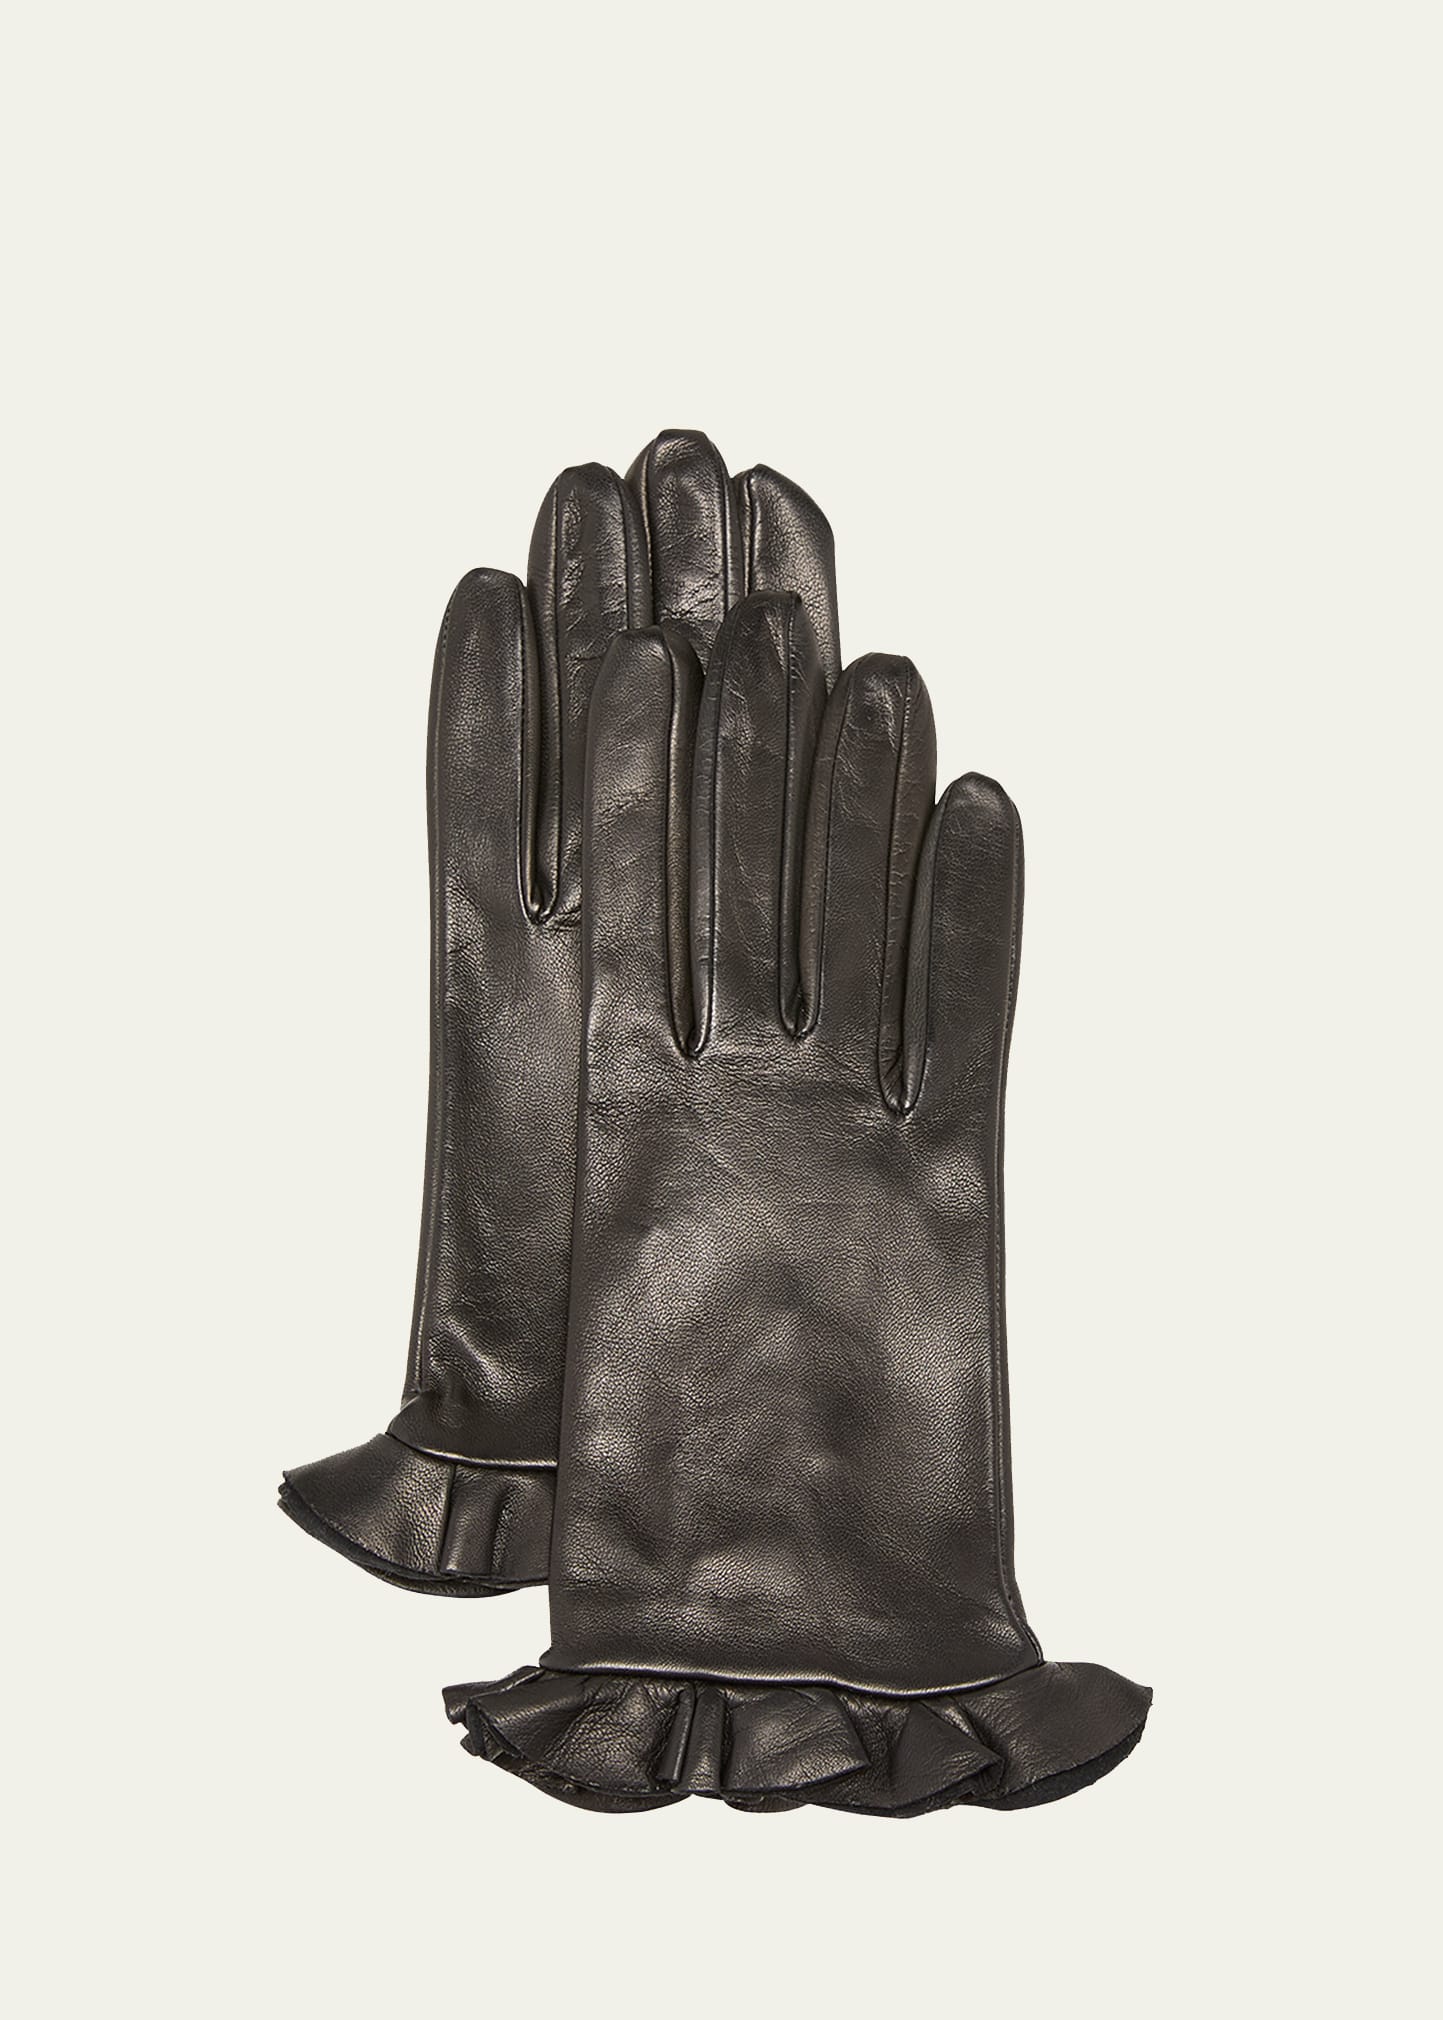 Danielle Ruffled Leather Gloves